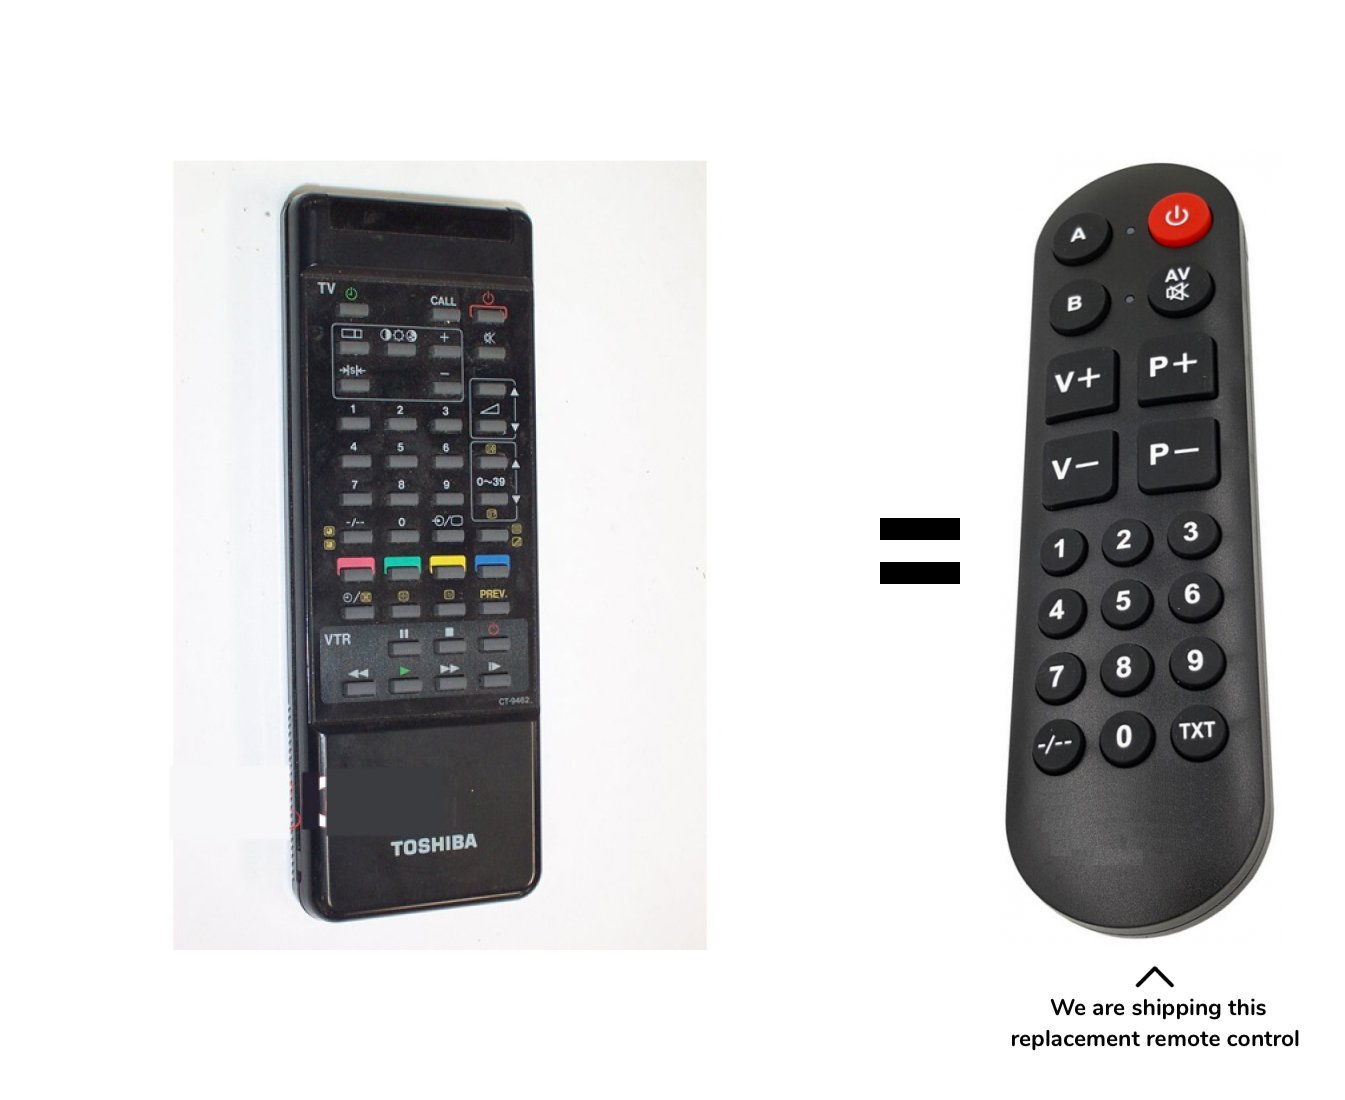 Toshiba CT-9400 remote control for seniors